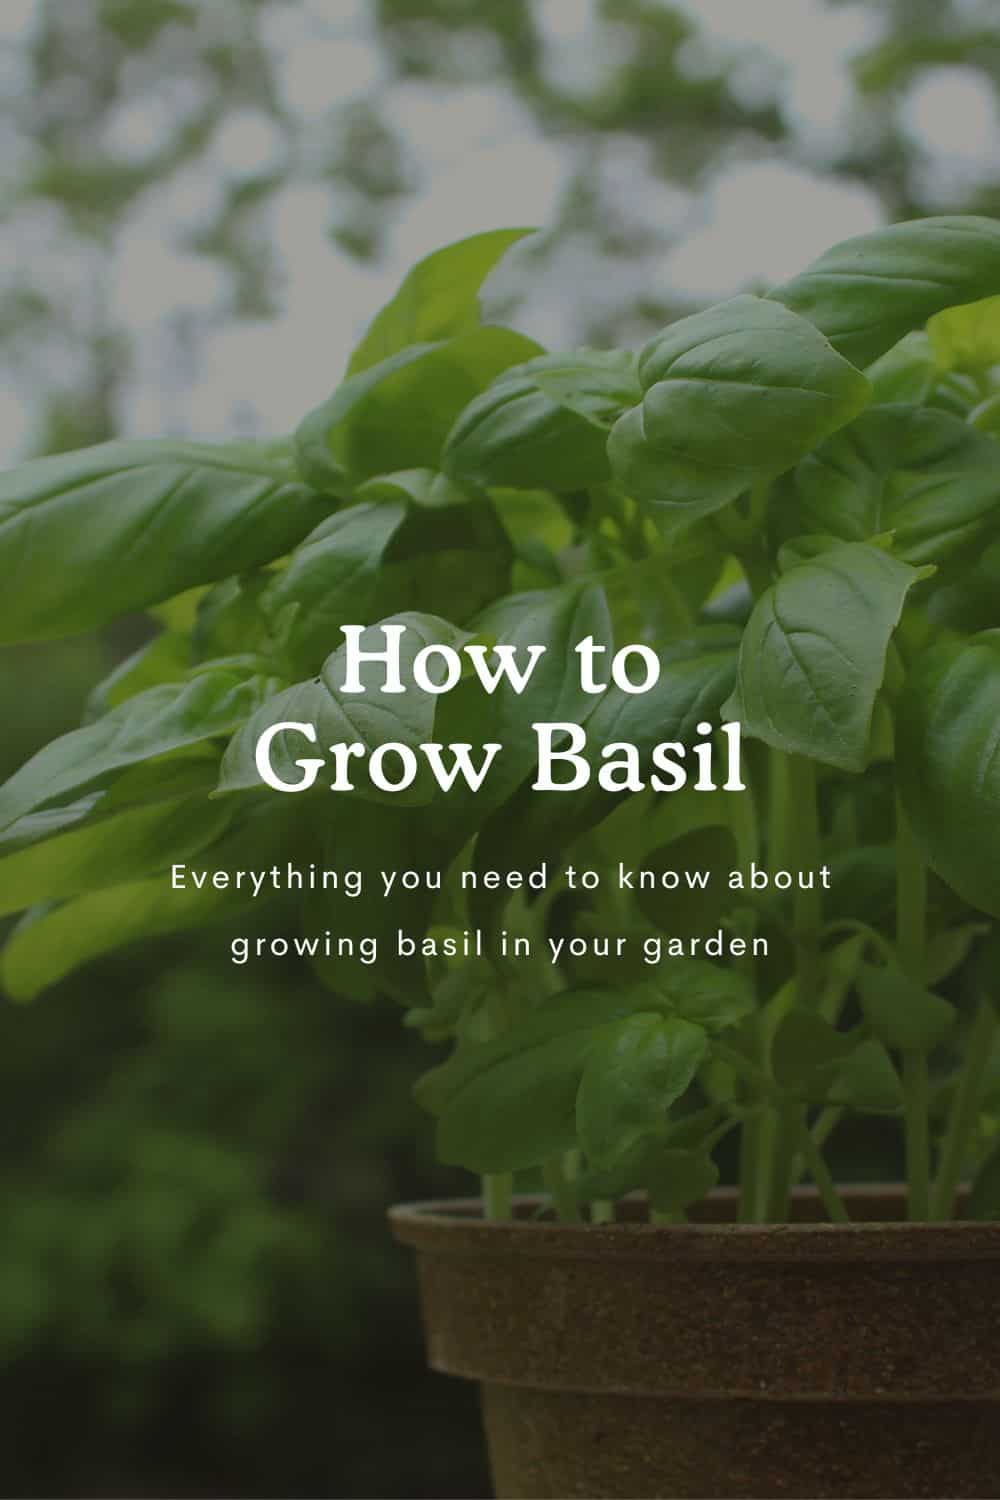 How to Grow Basil text over image of basil